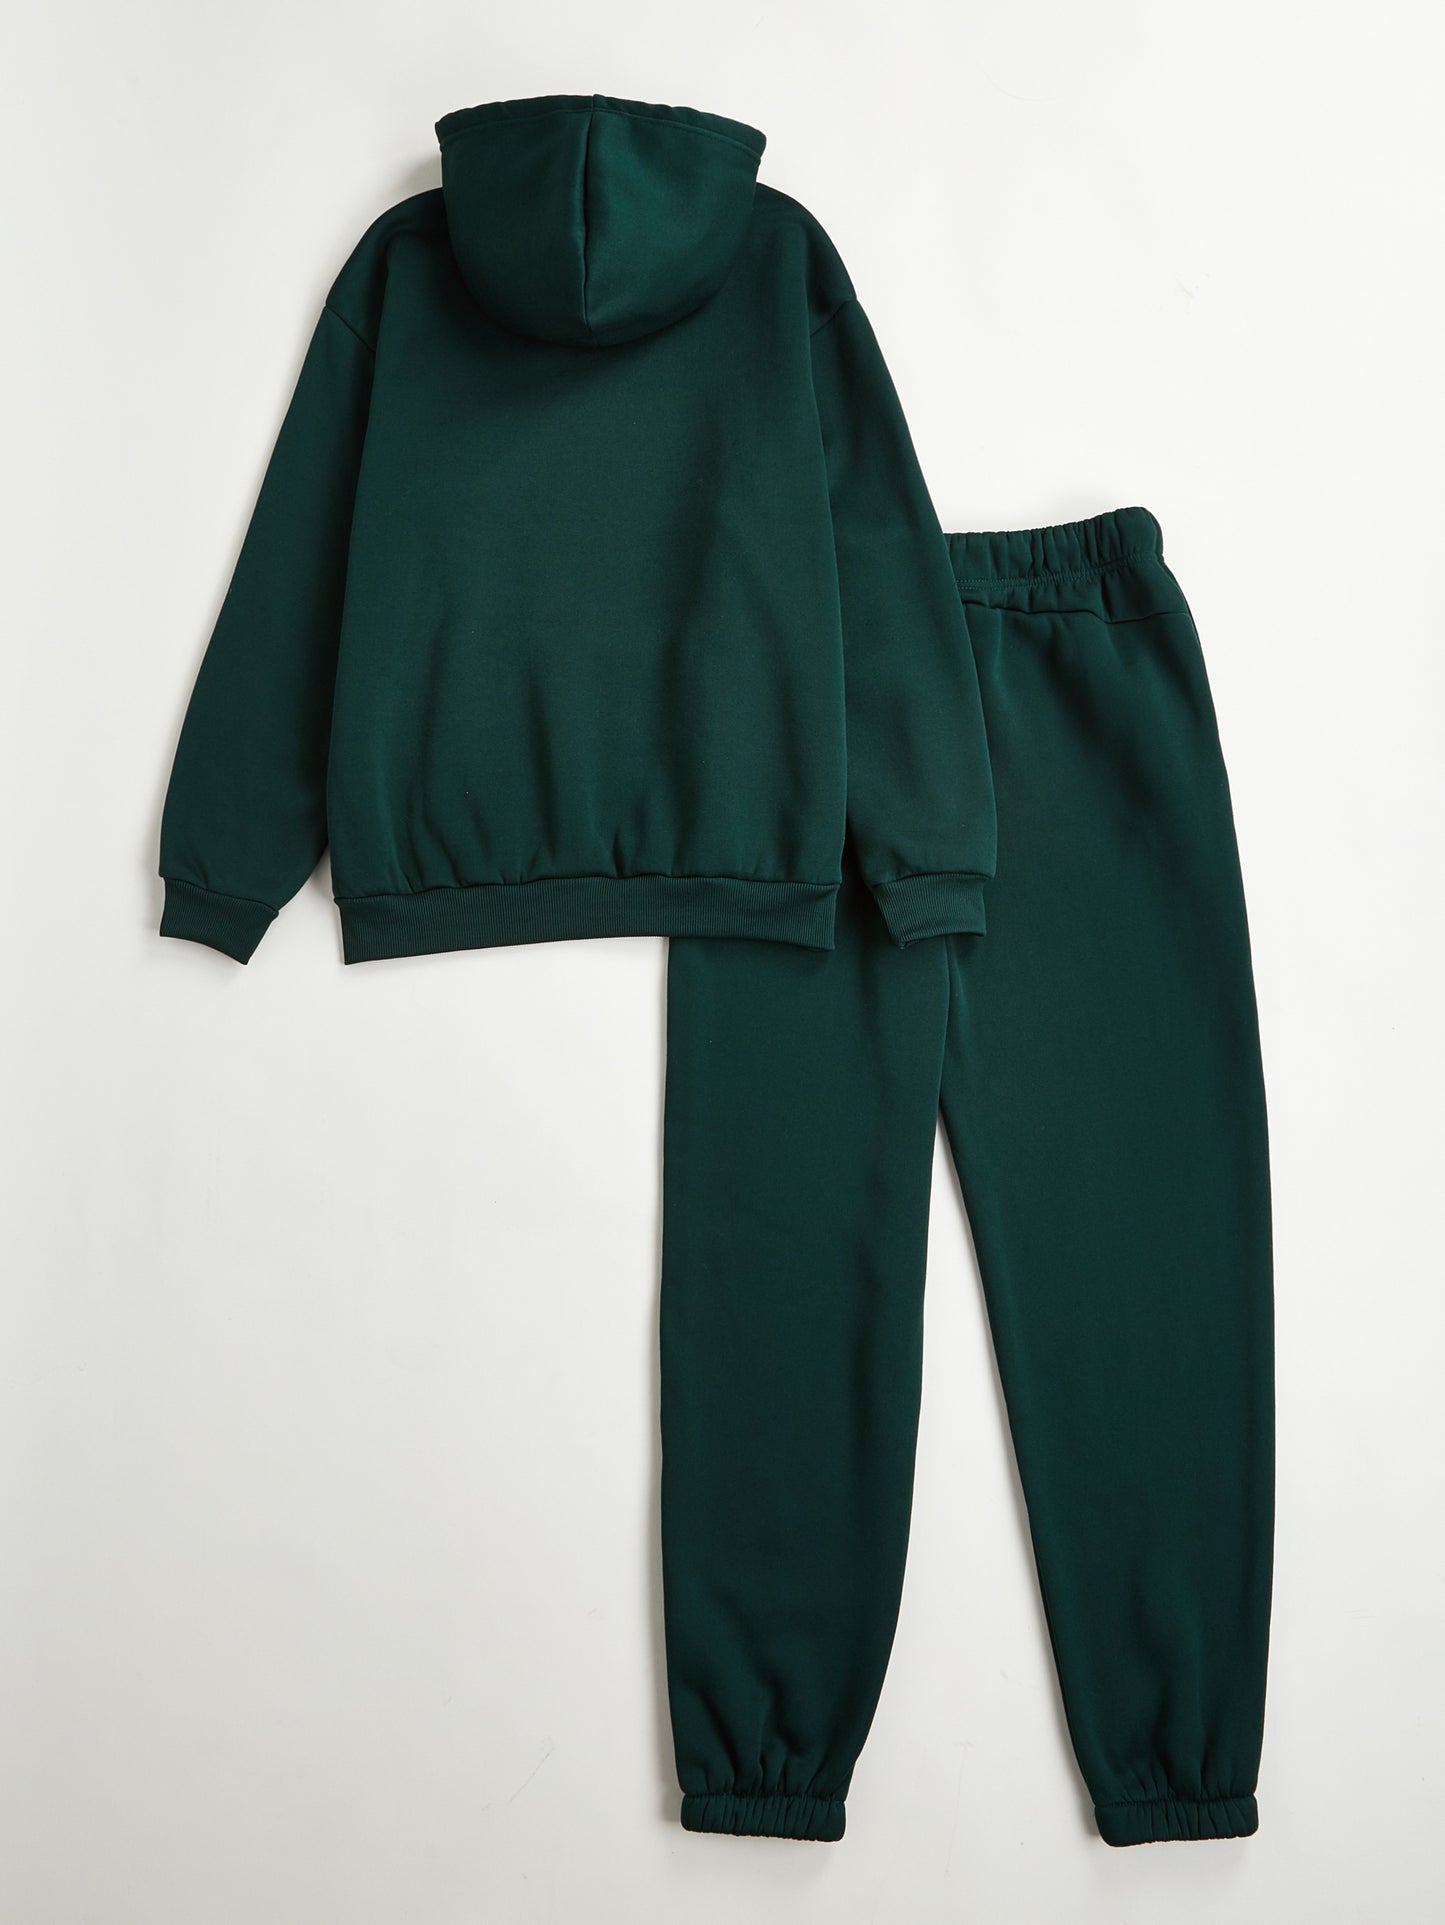 Casual Matching Two-piece Set, Kangaroo Pocket Hoodie & Drawstring Pants Outfits, Women's Clothing